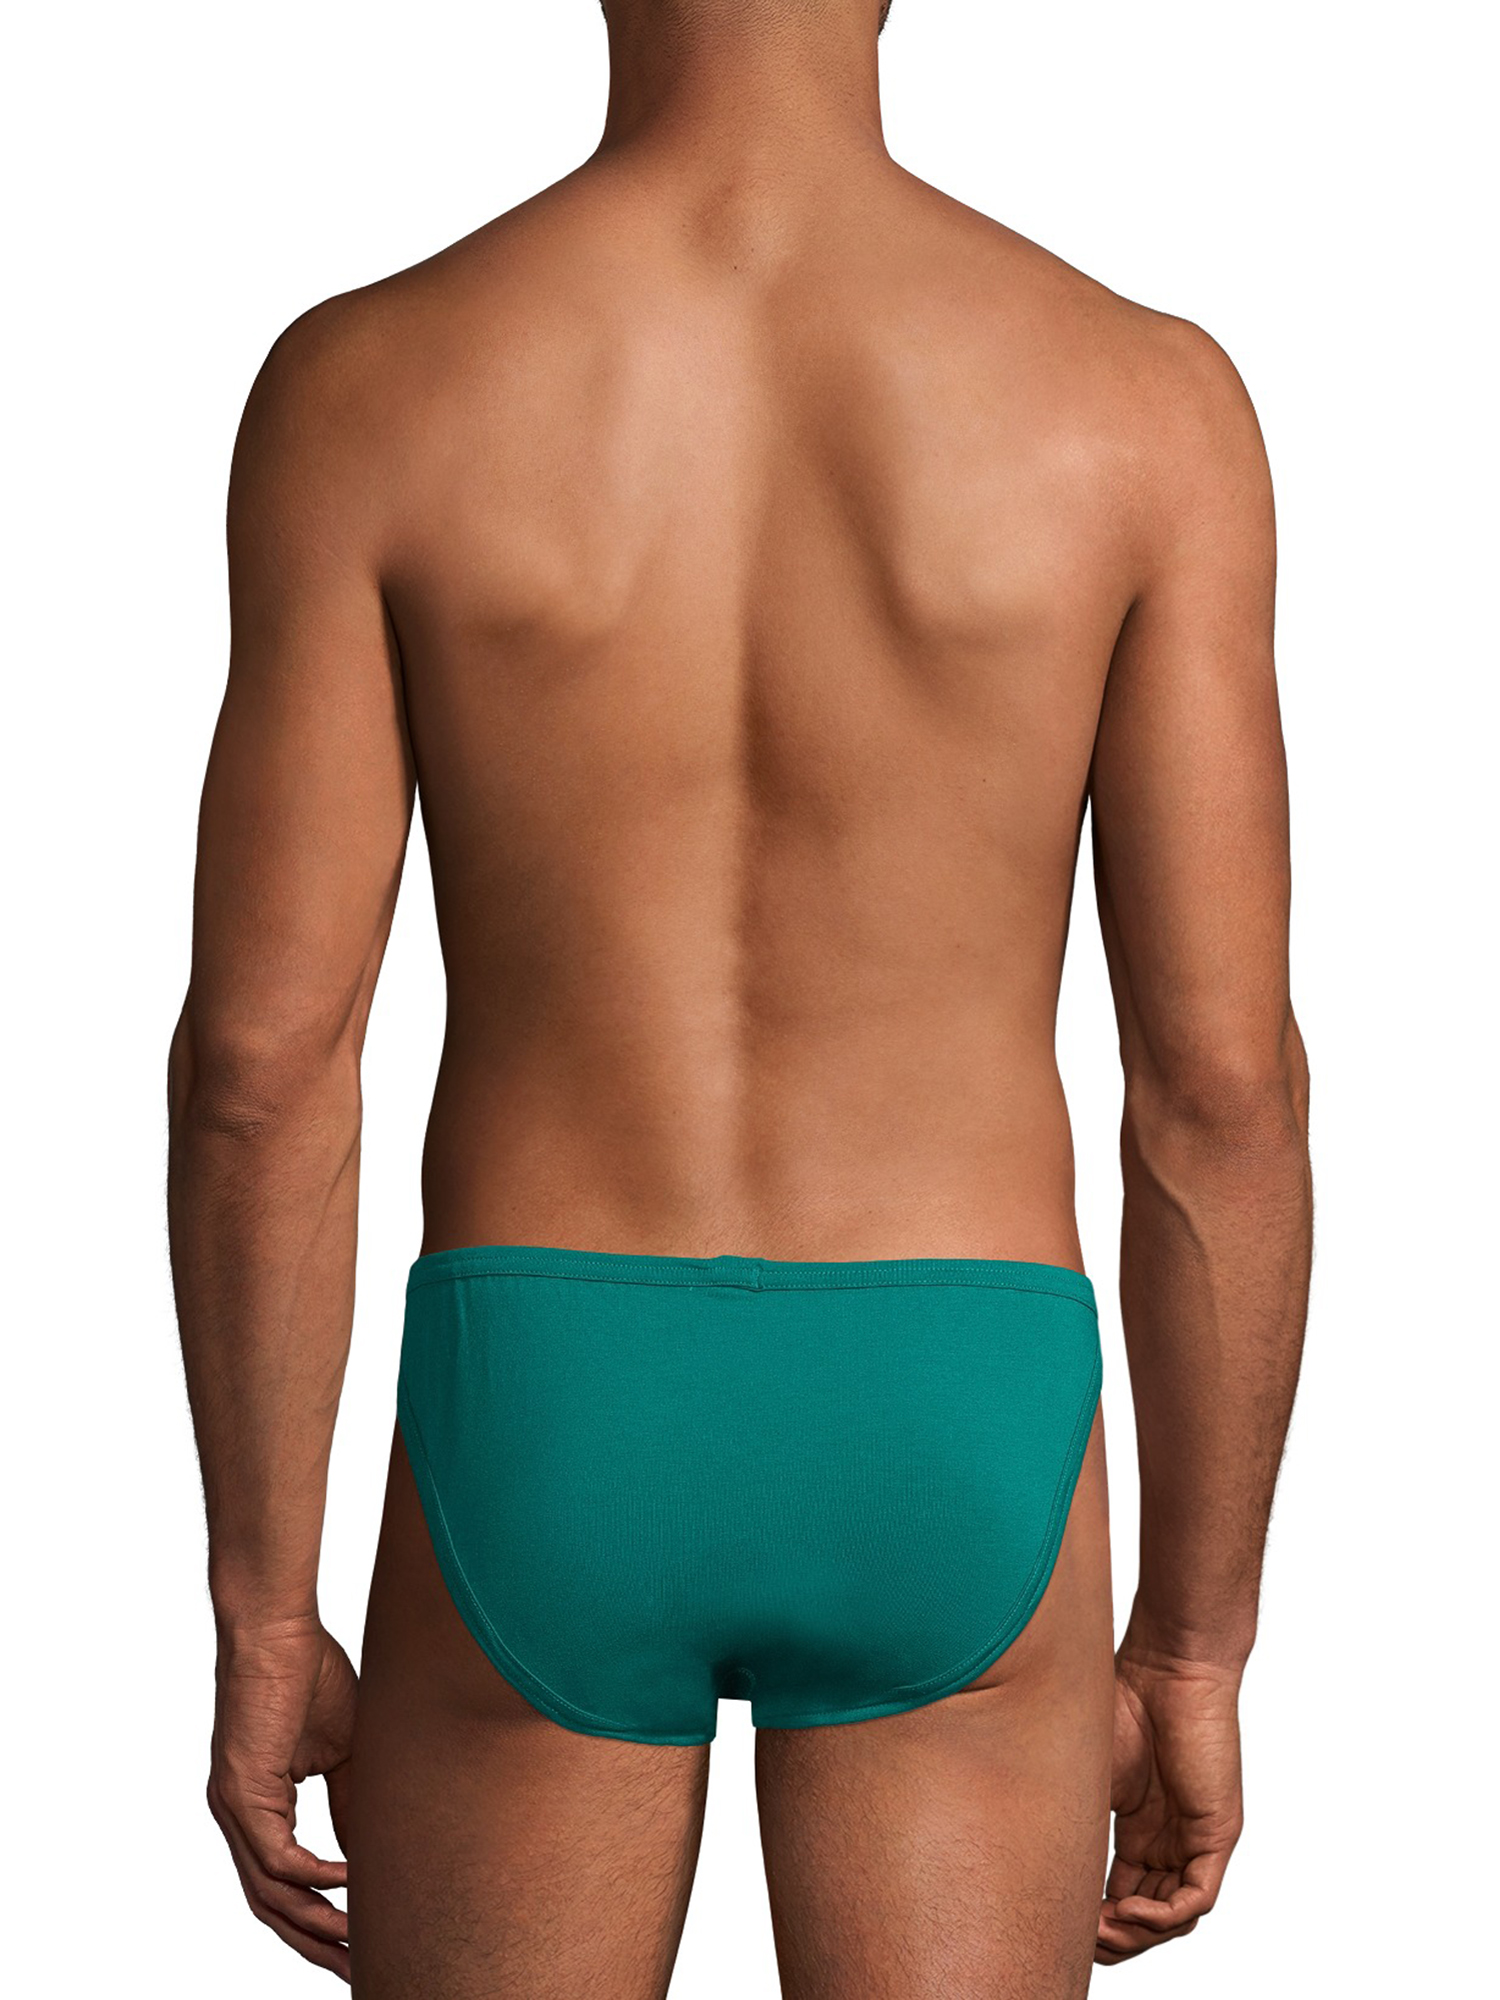 Hanes Men's Comfort Flex Fit Ultra Soft Cotton Stretch String Bikinis, 6 Pack - image 3 of 7